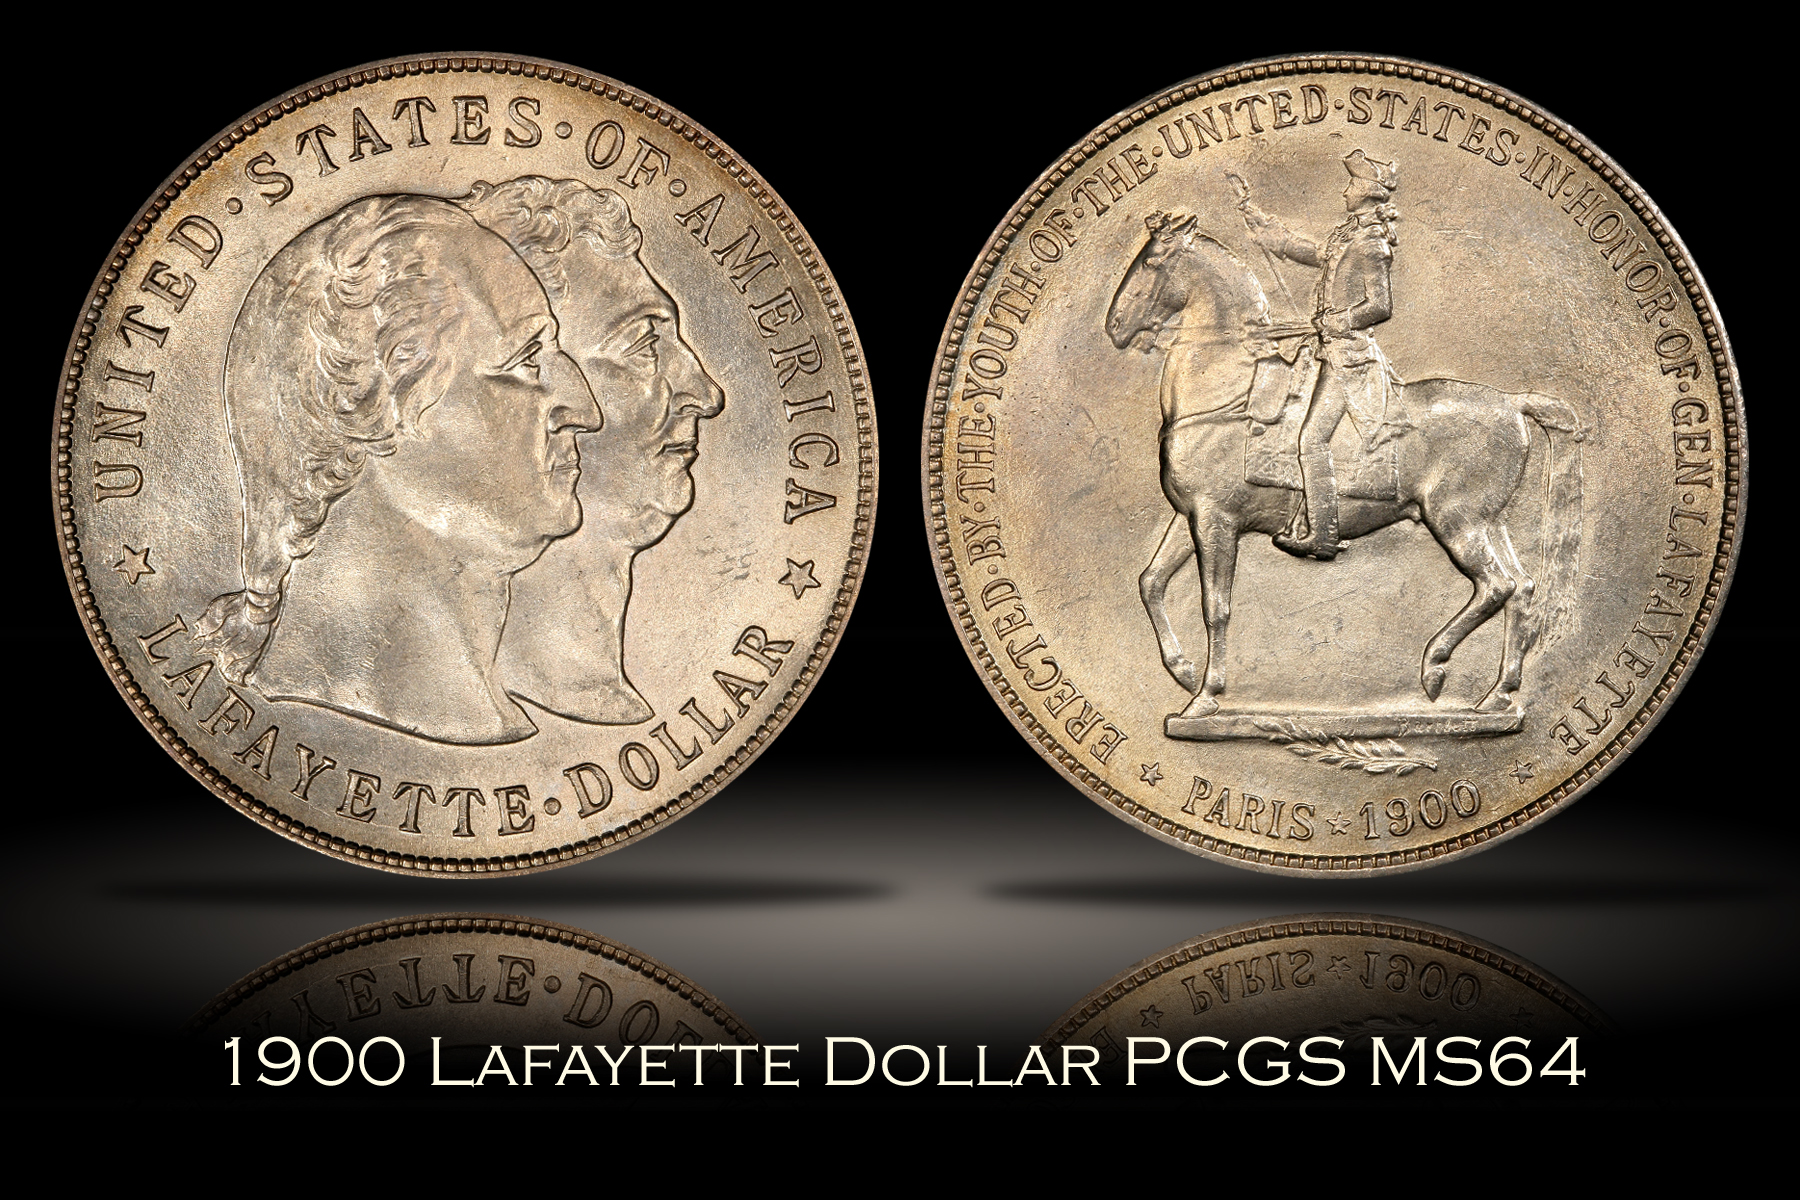 Michael Kittle Rare Coins - 1900 Lafayette Commemorative Silver Dollar